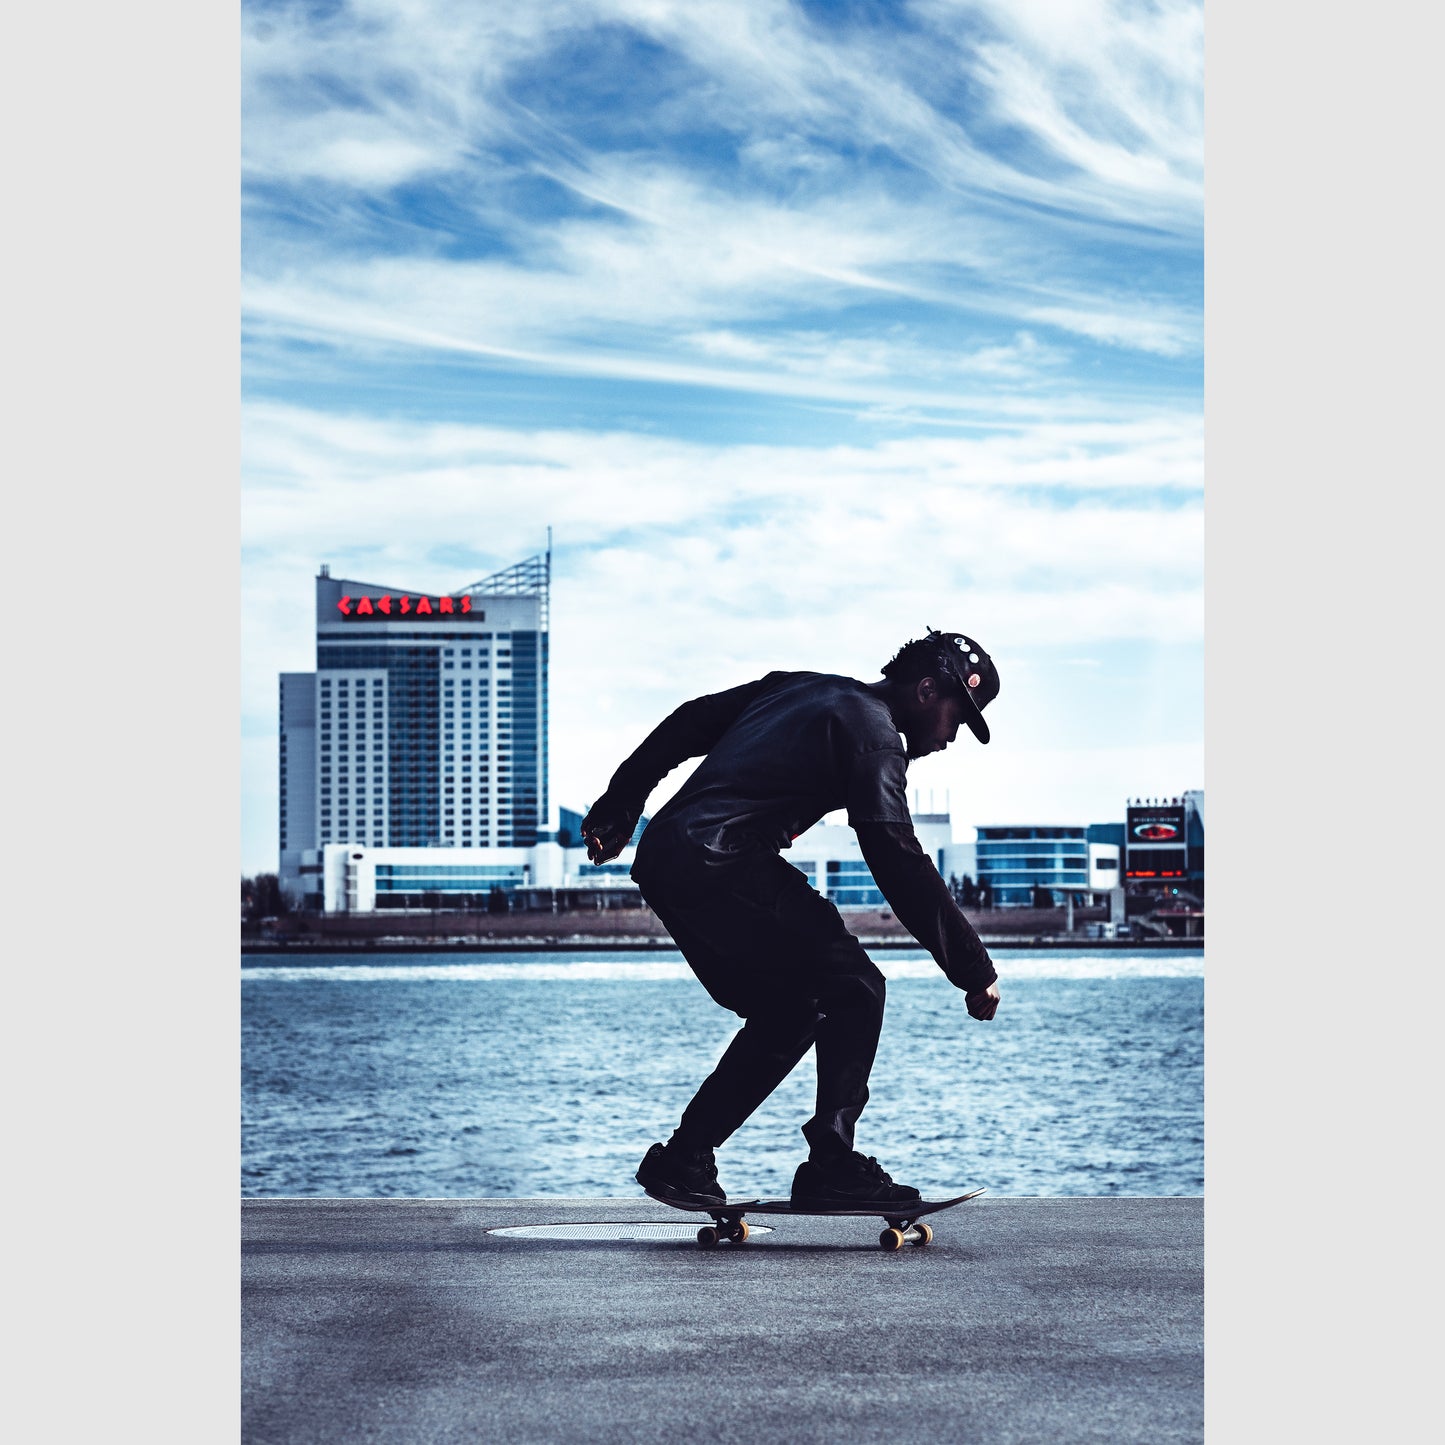 Skateboard Empire - Vannopics, Day, Detroit, Portrait, Vertical